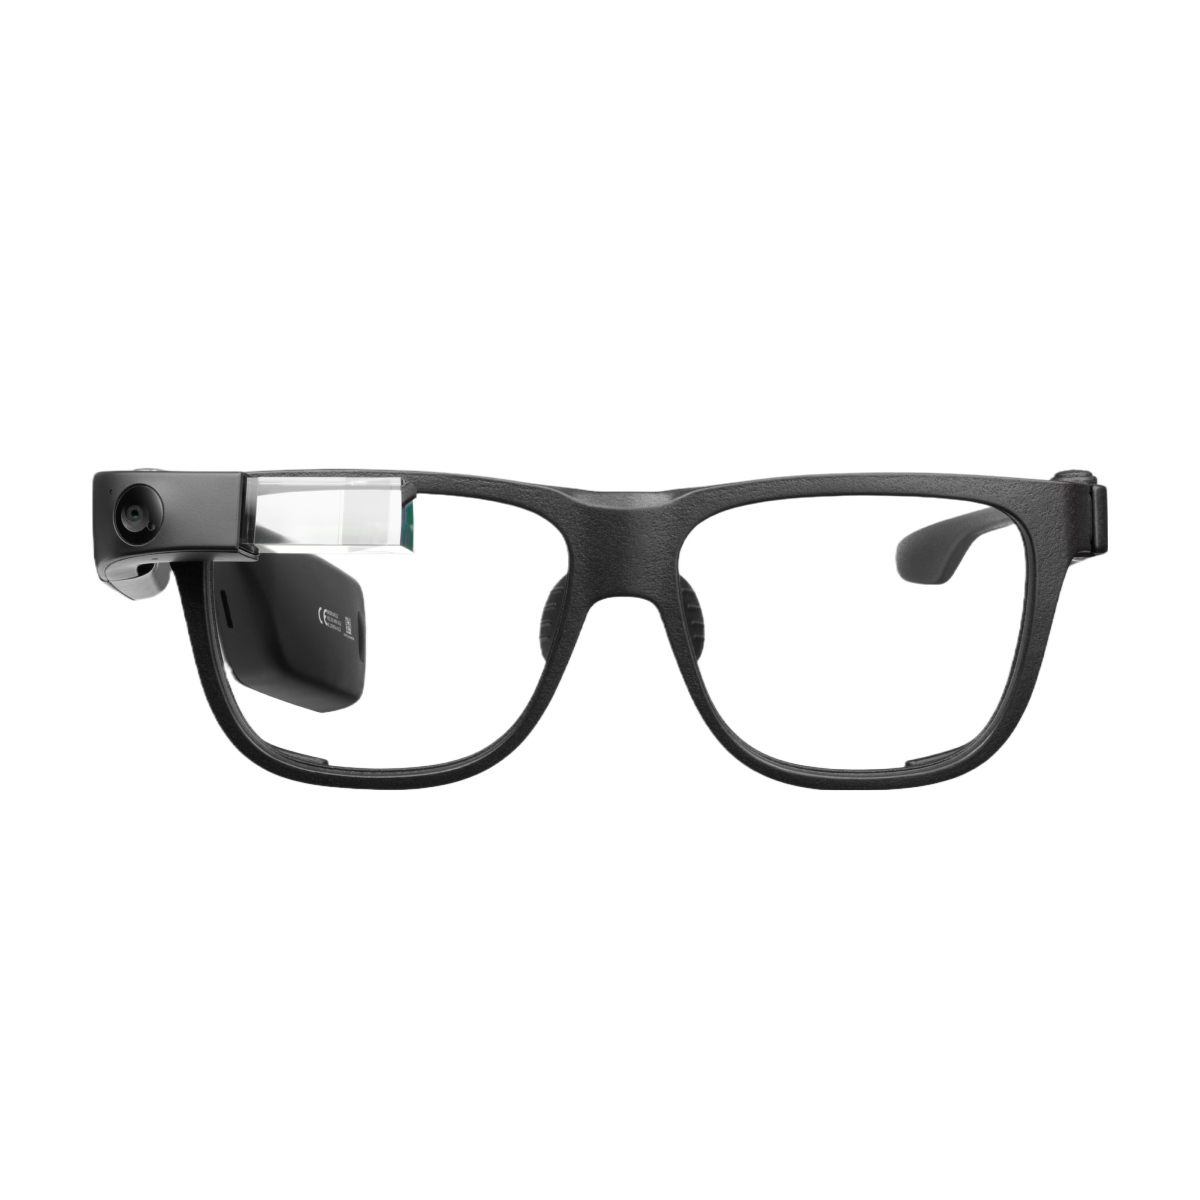 Envision Glasses: Home Edition - AI-powered smartglasses – Envision Store